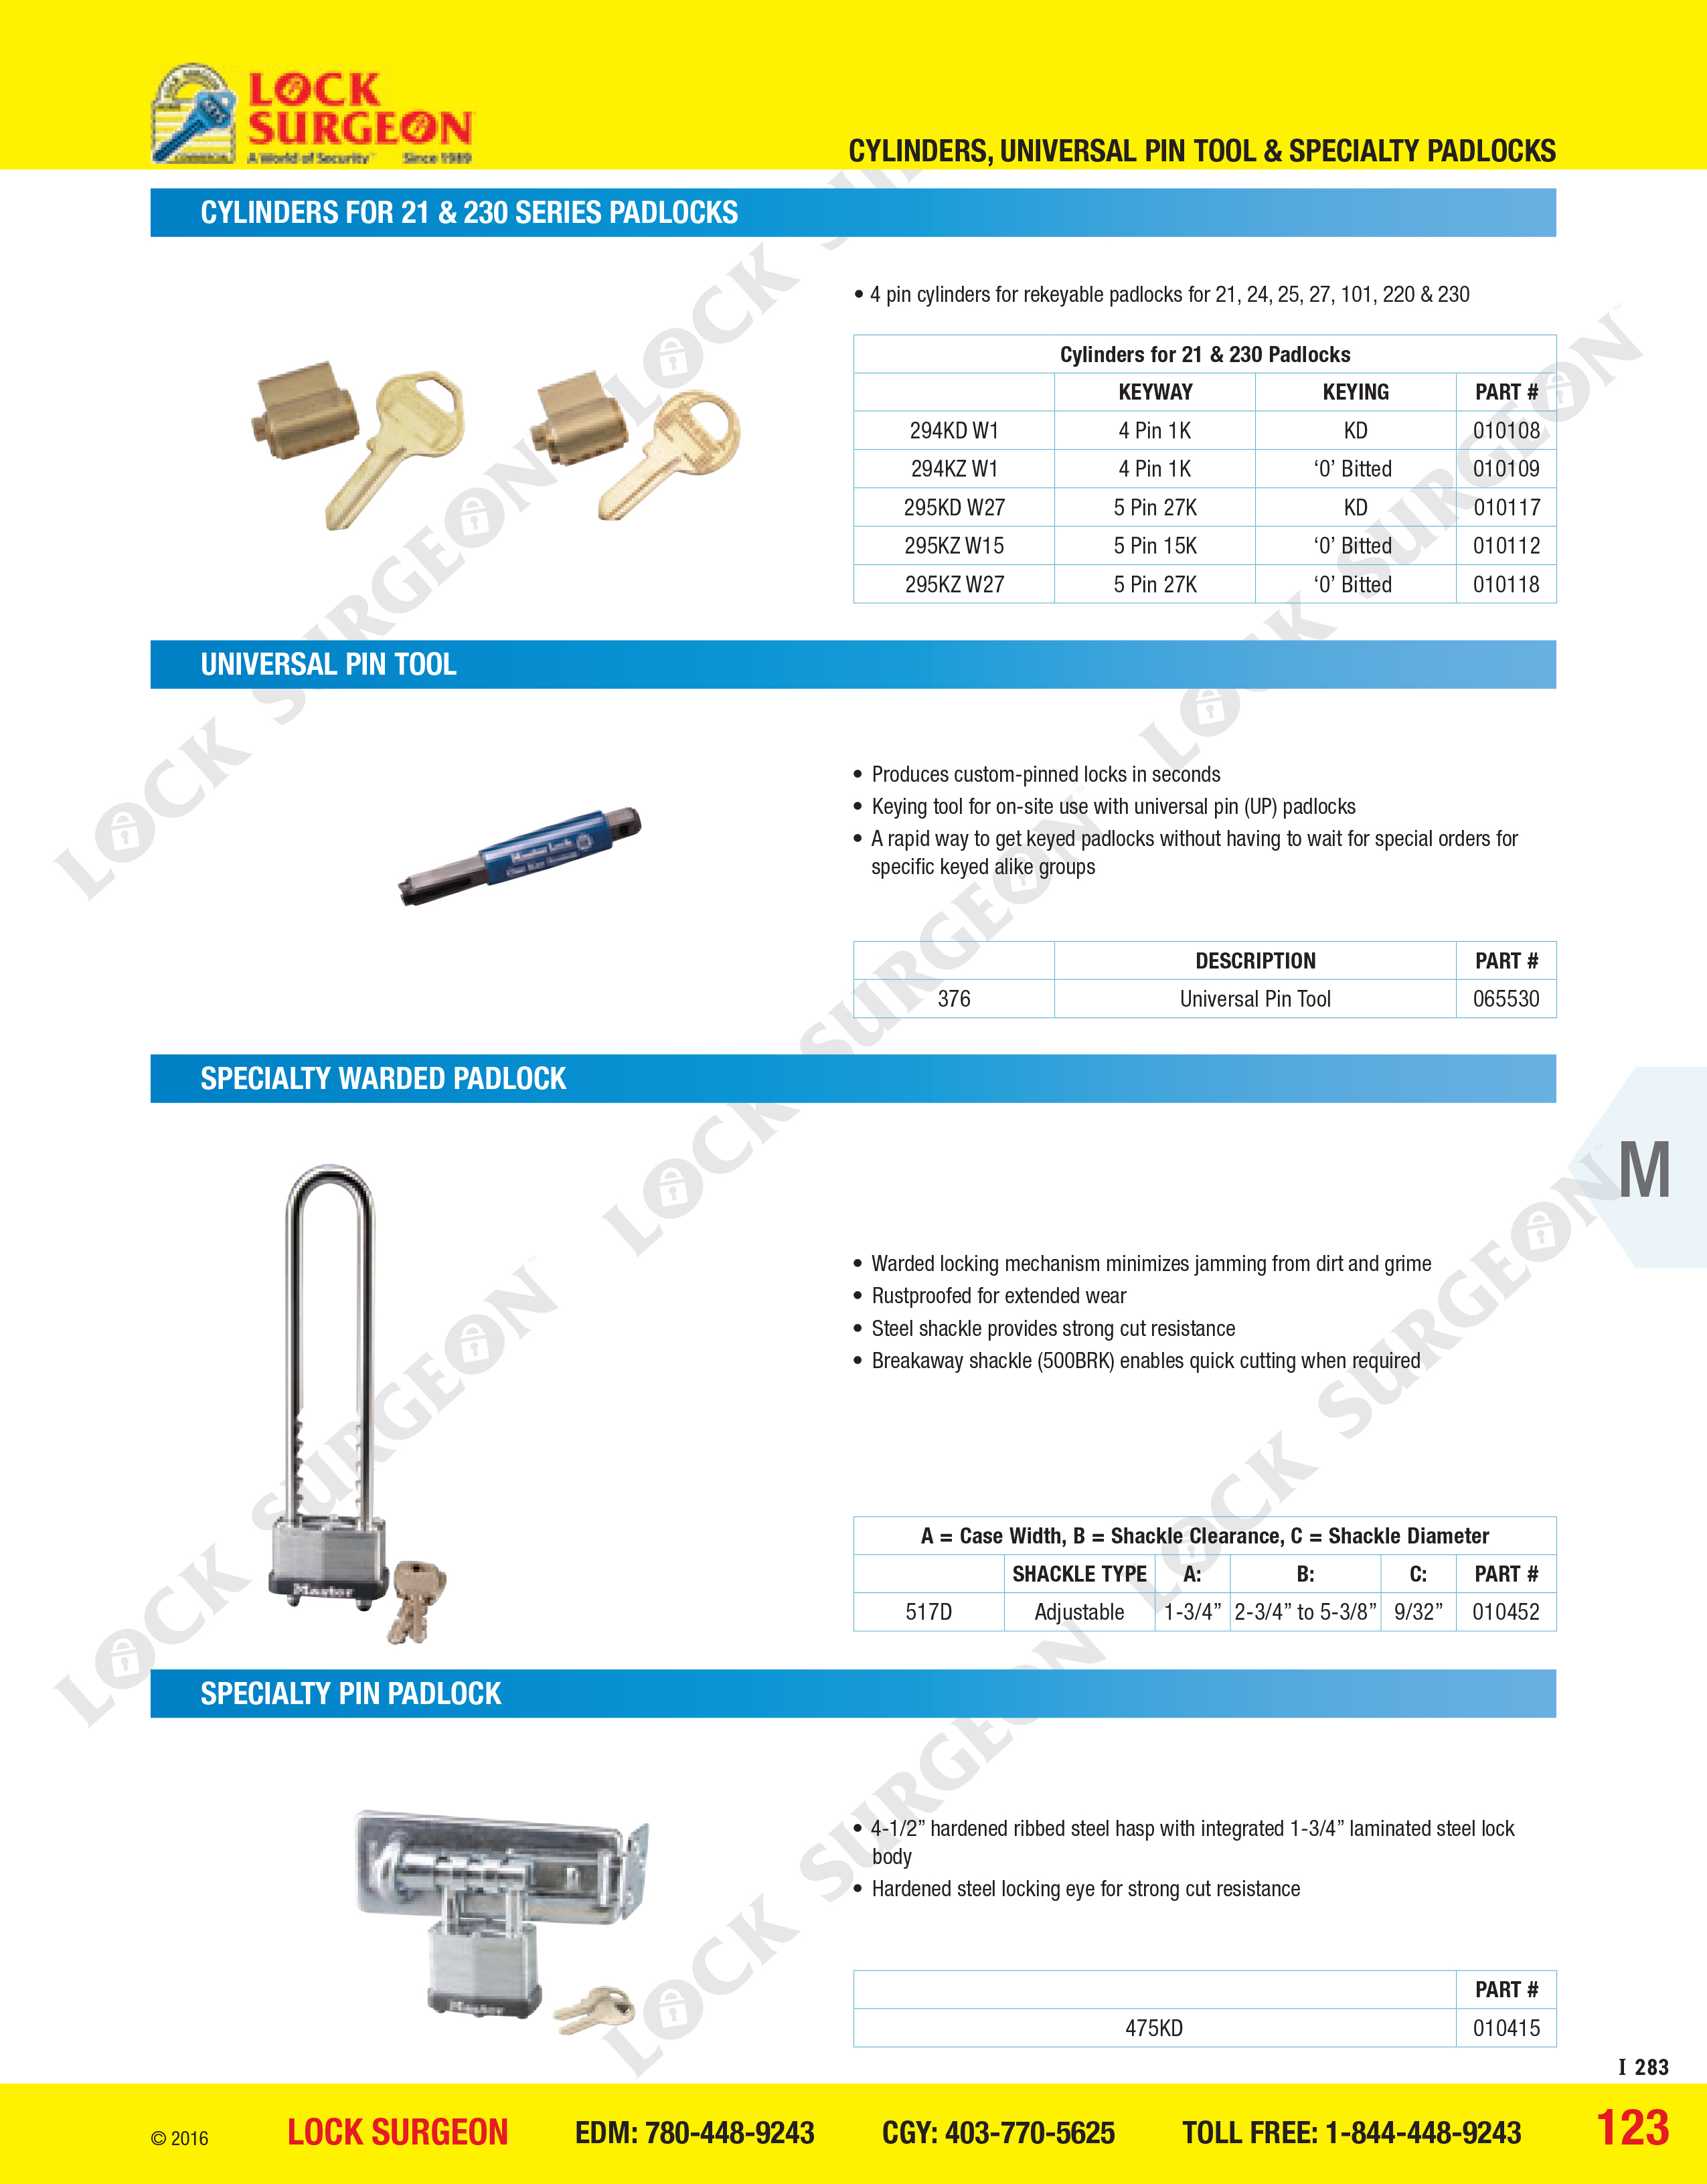 Master Lock Cylinders 21 & 230 series, universal pin tool, specialty padlock & pin padlock Acheson.